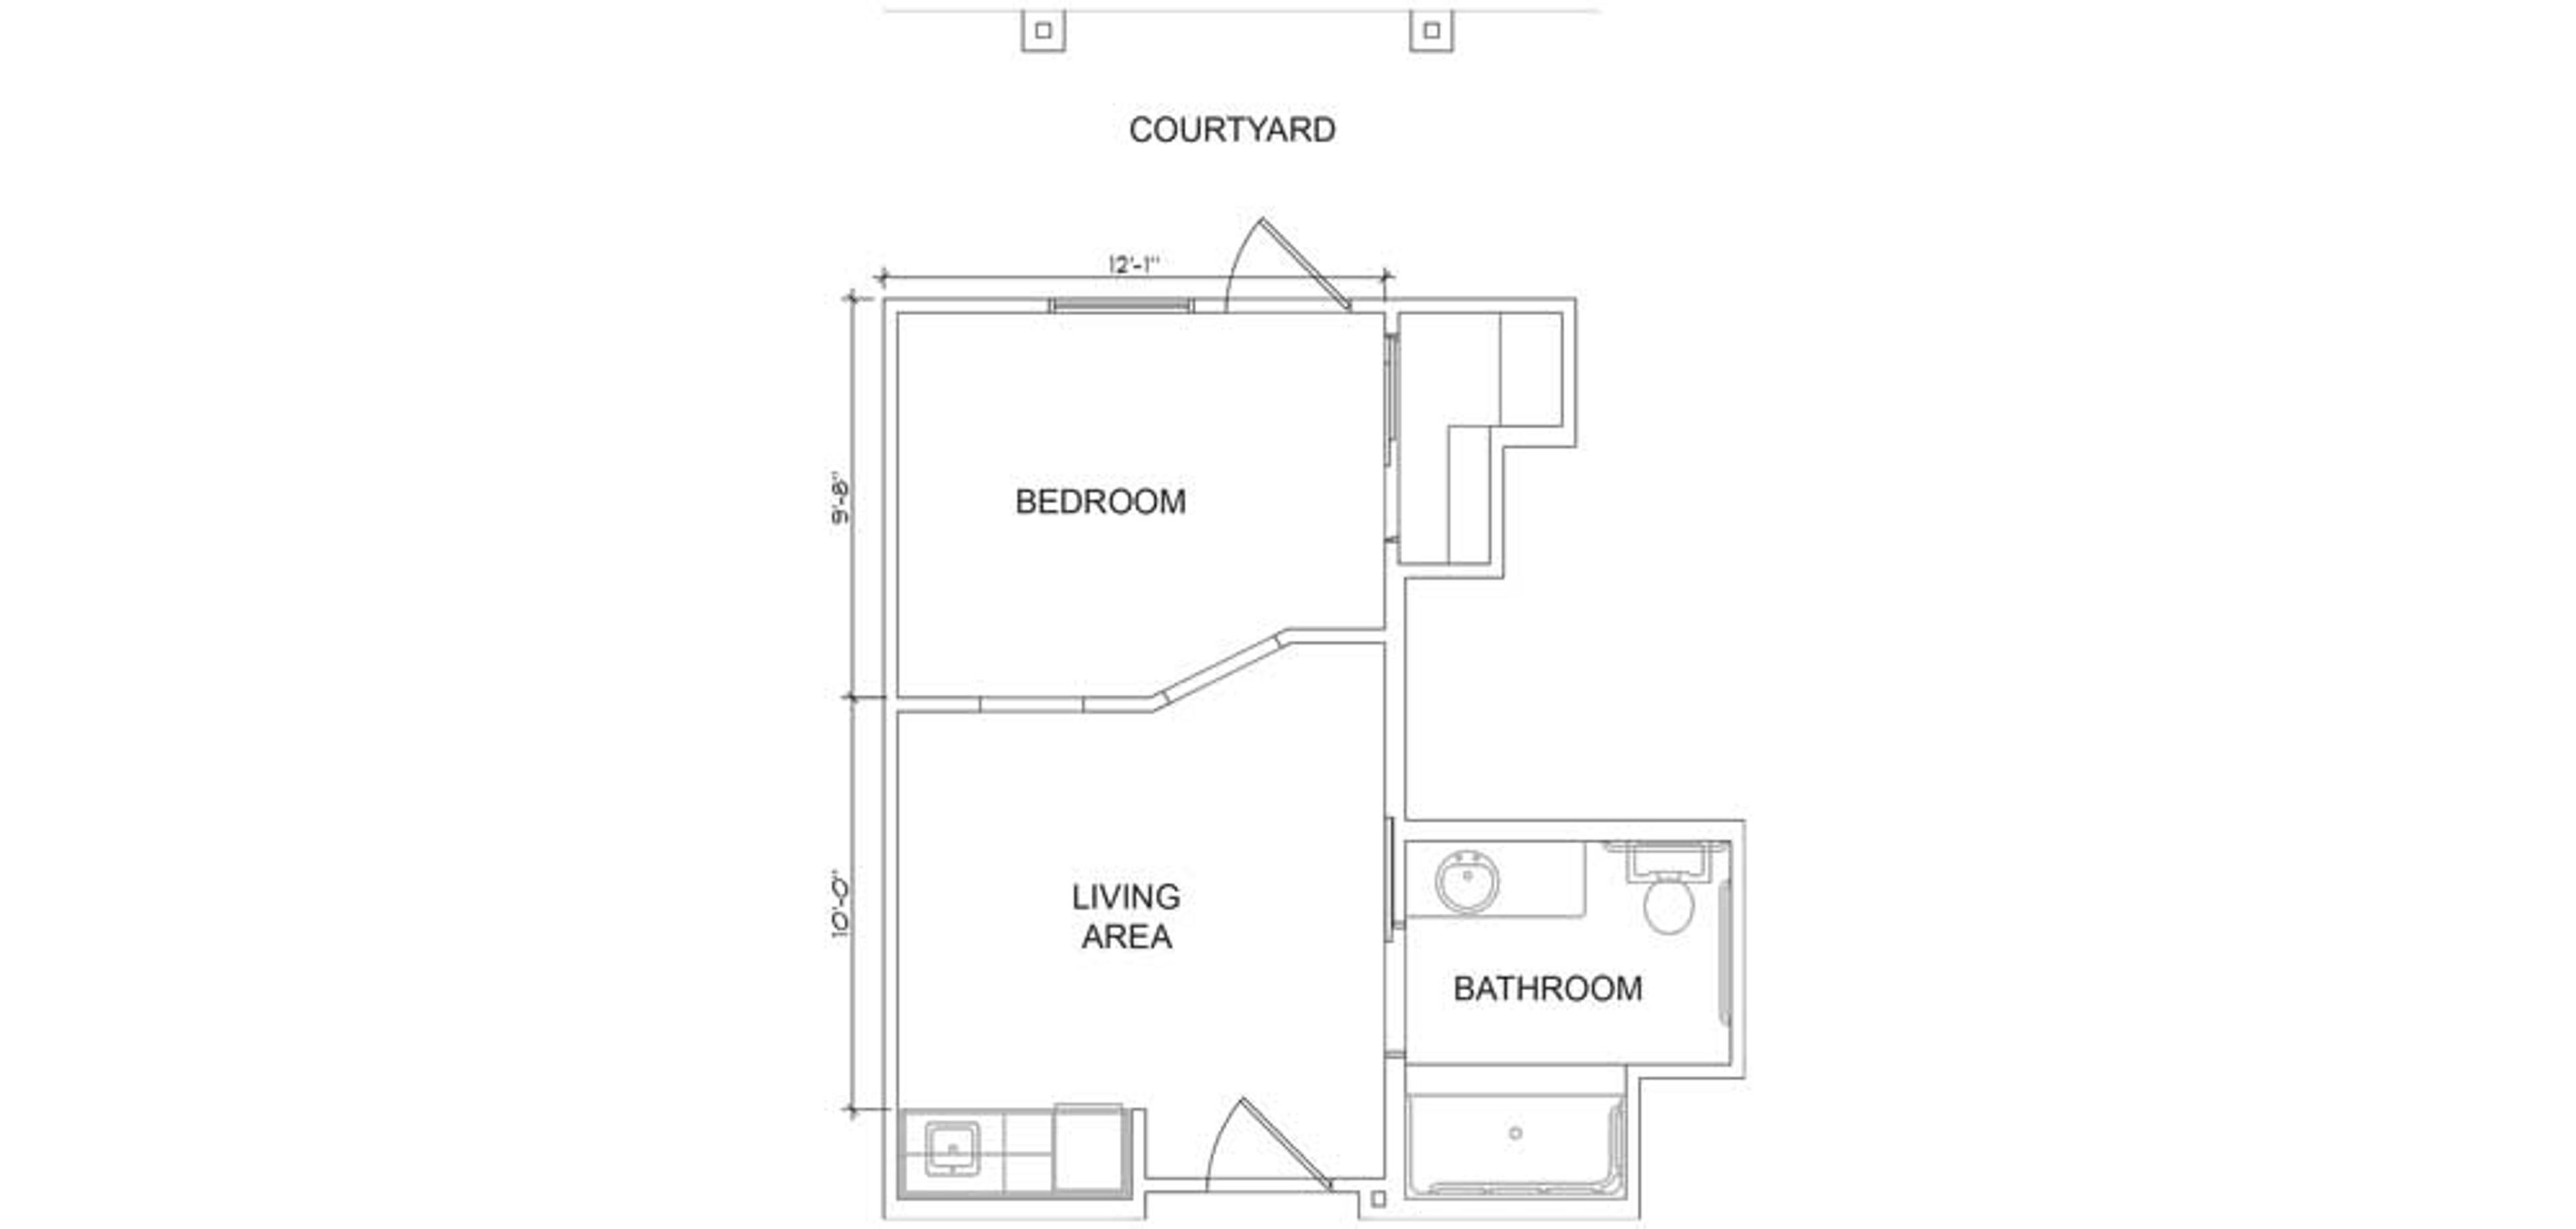 Floorplan - Heritage Oaks - 1B 1B Courtyard AL